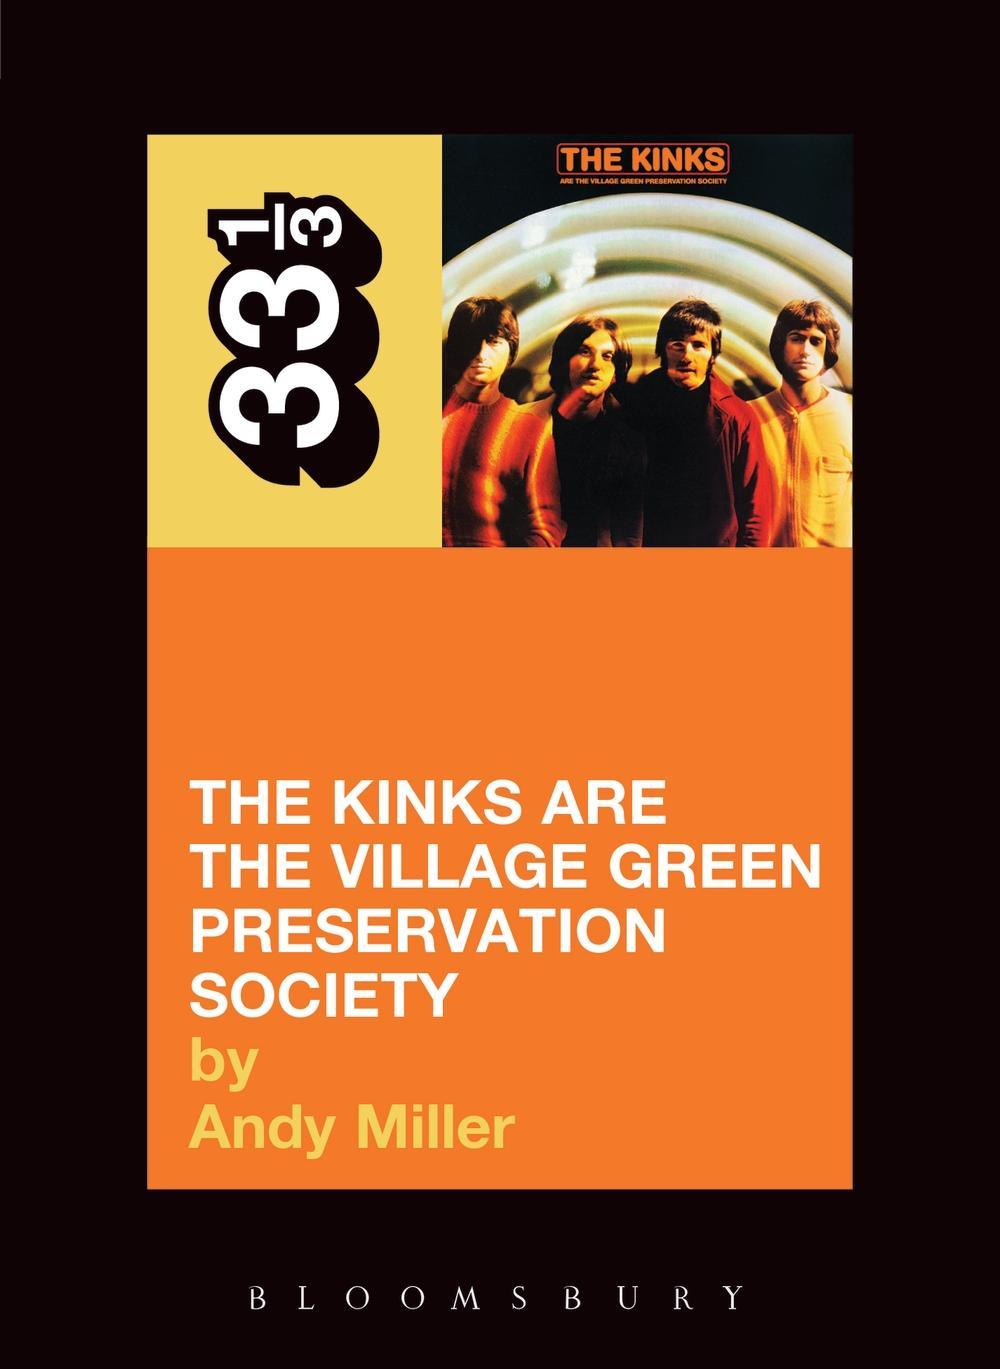 Kinks' The Village Green Preservation Society